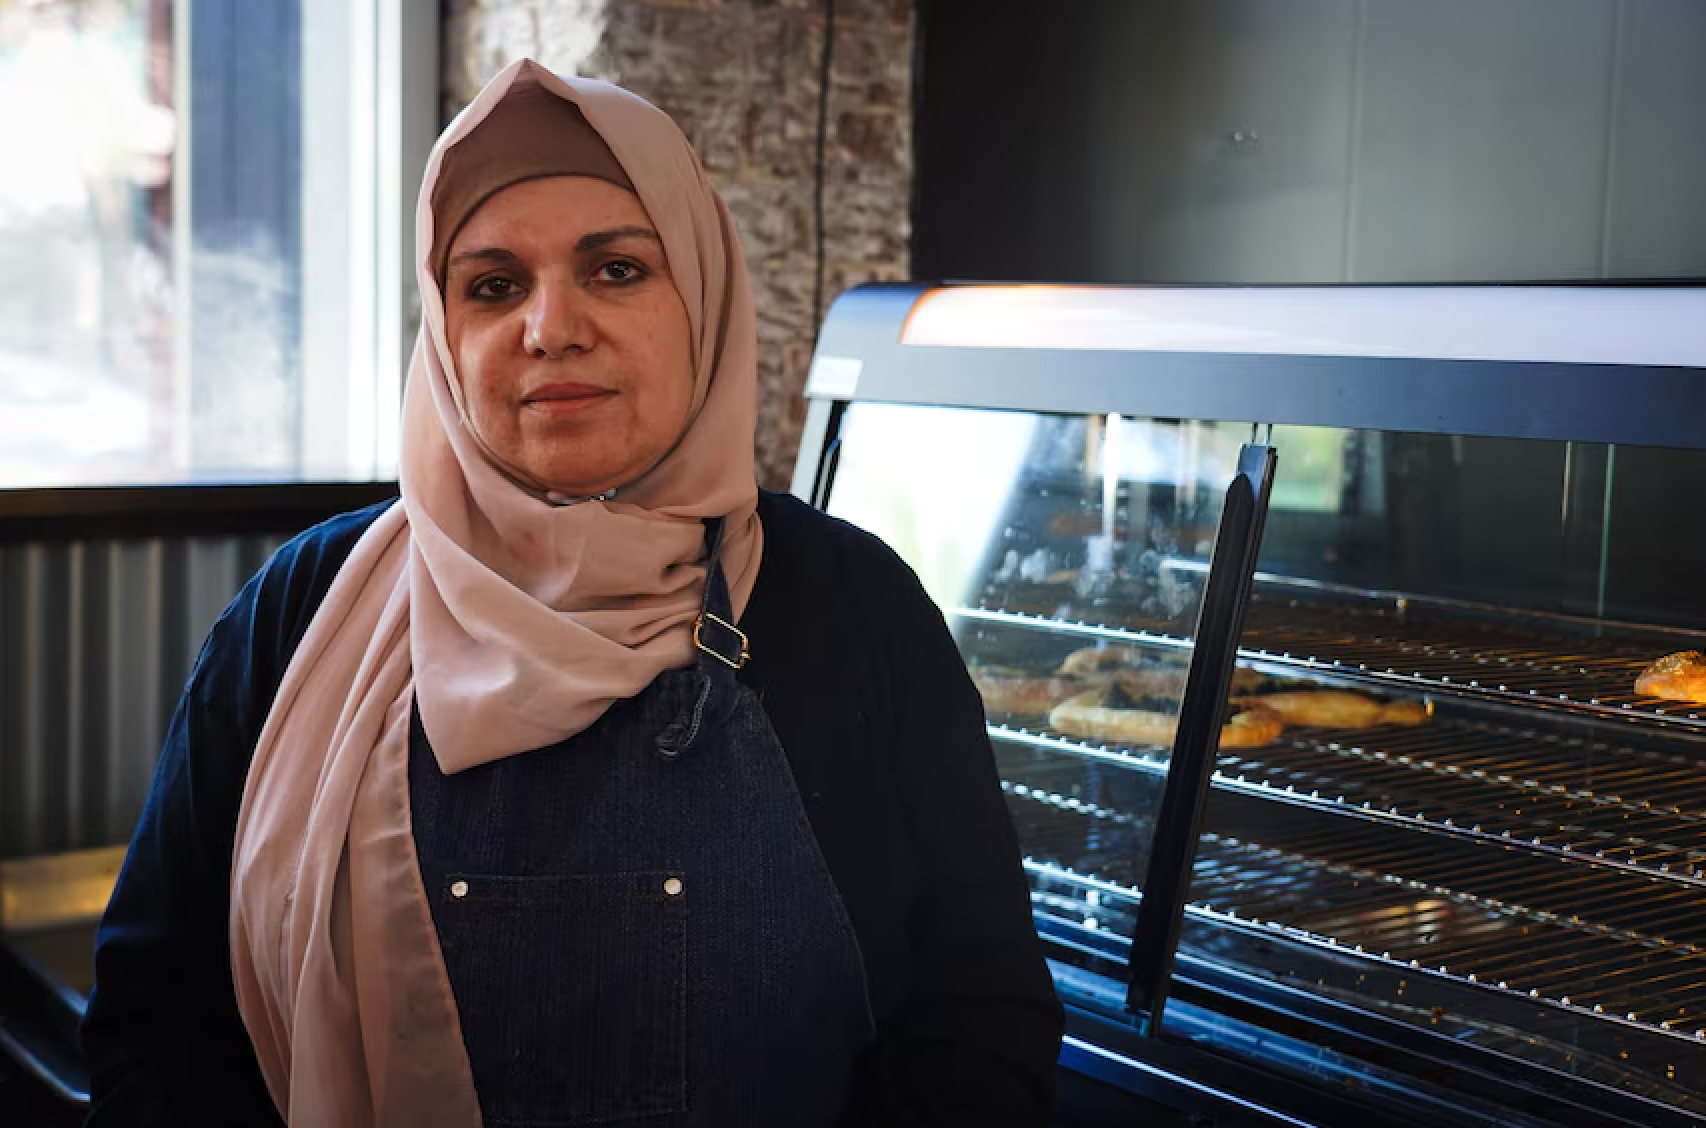 Social enterprise highlights Palestinian cooking in effort to foster understanding